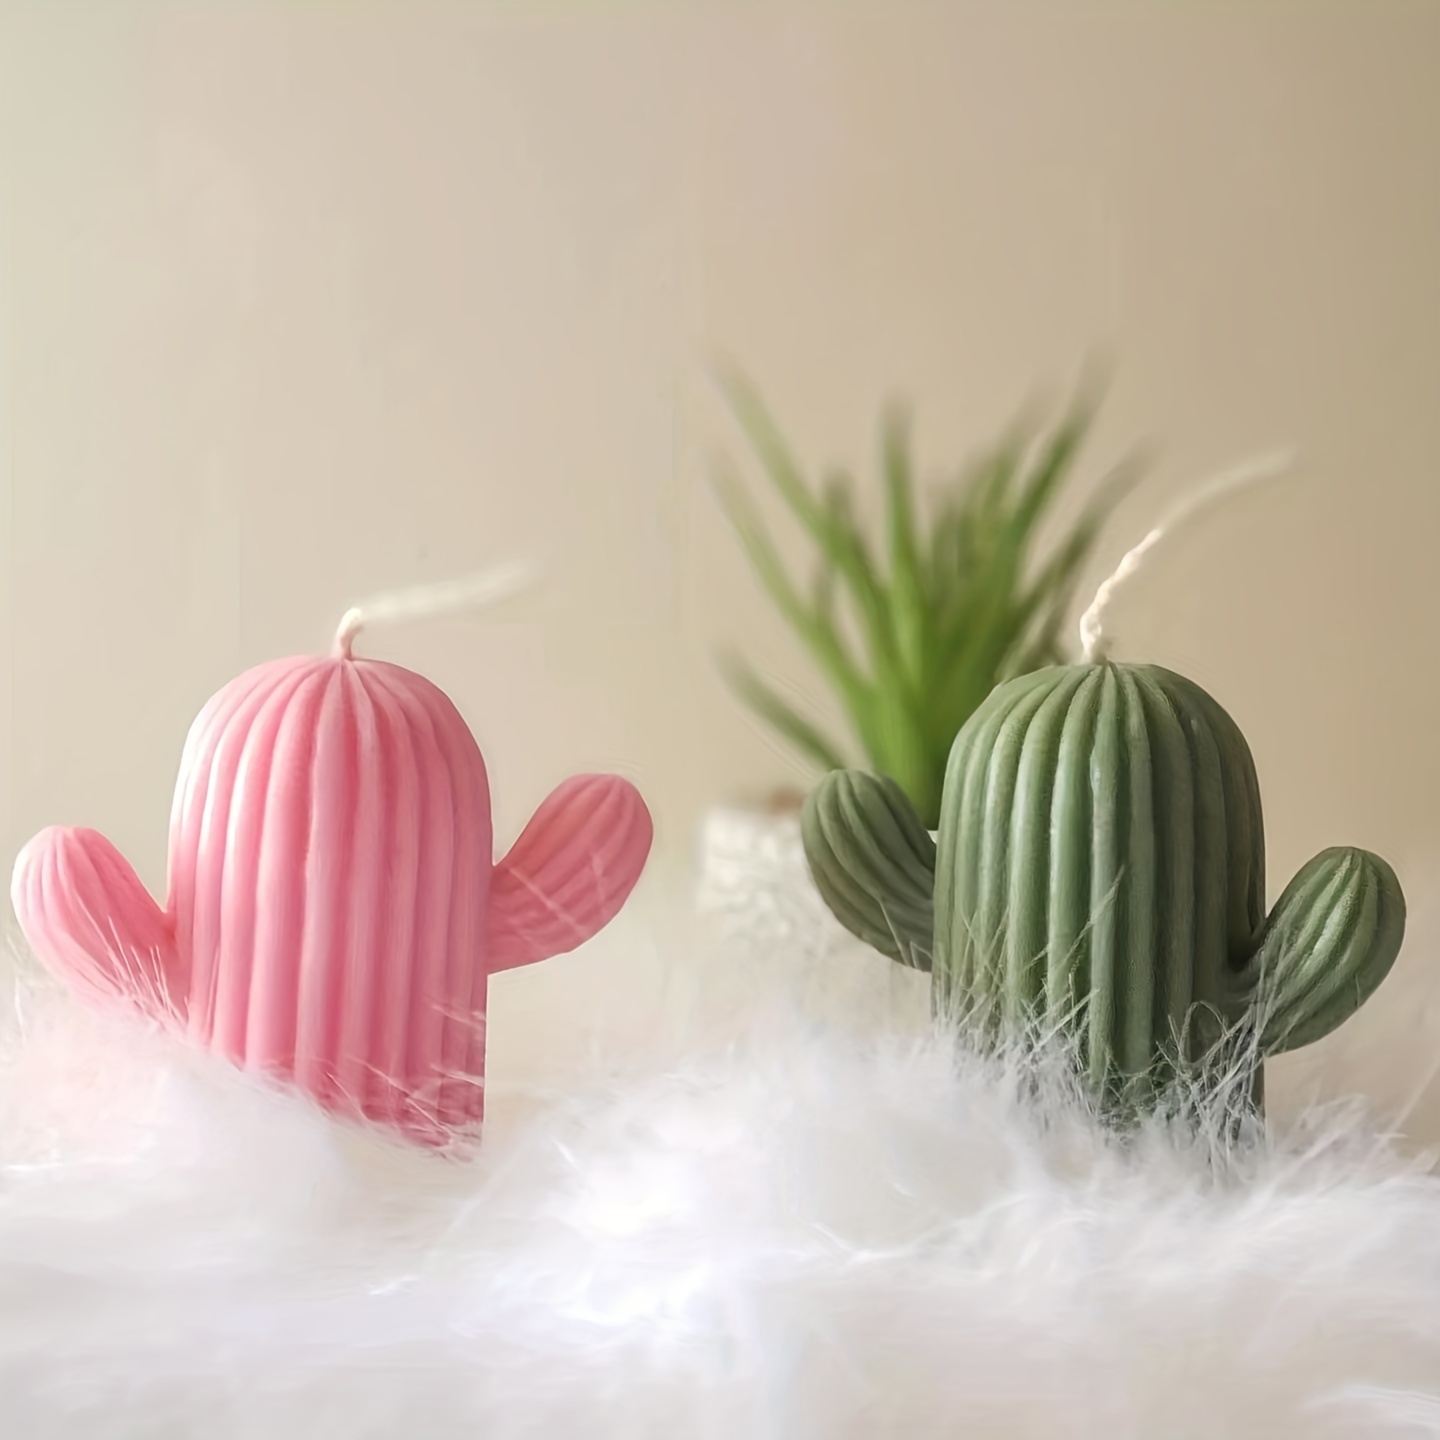 80th birthday 3D cactus shaped cake . - YouTube